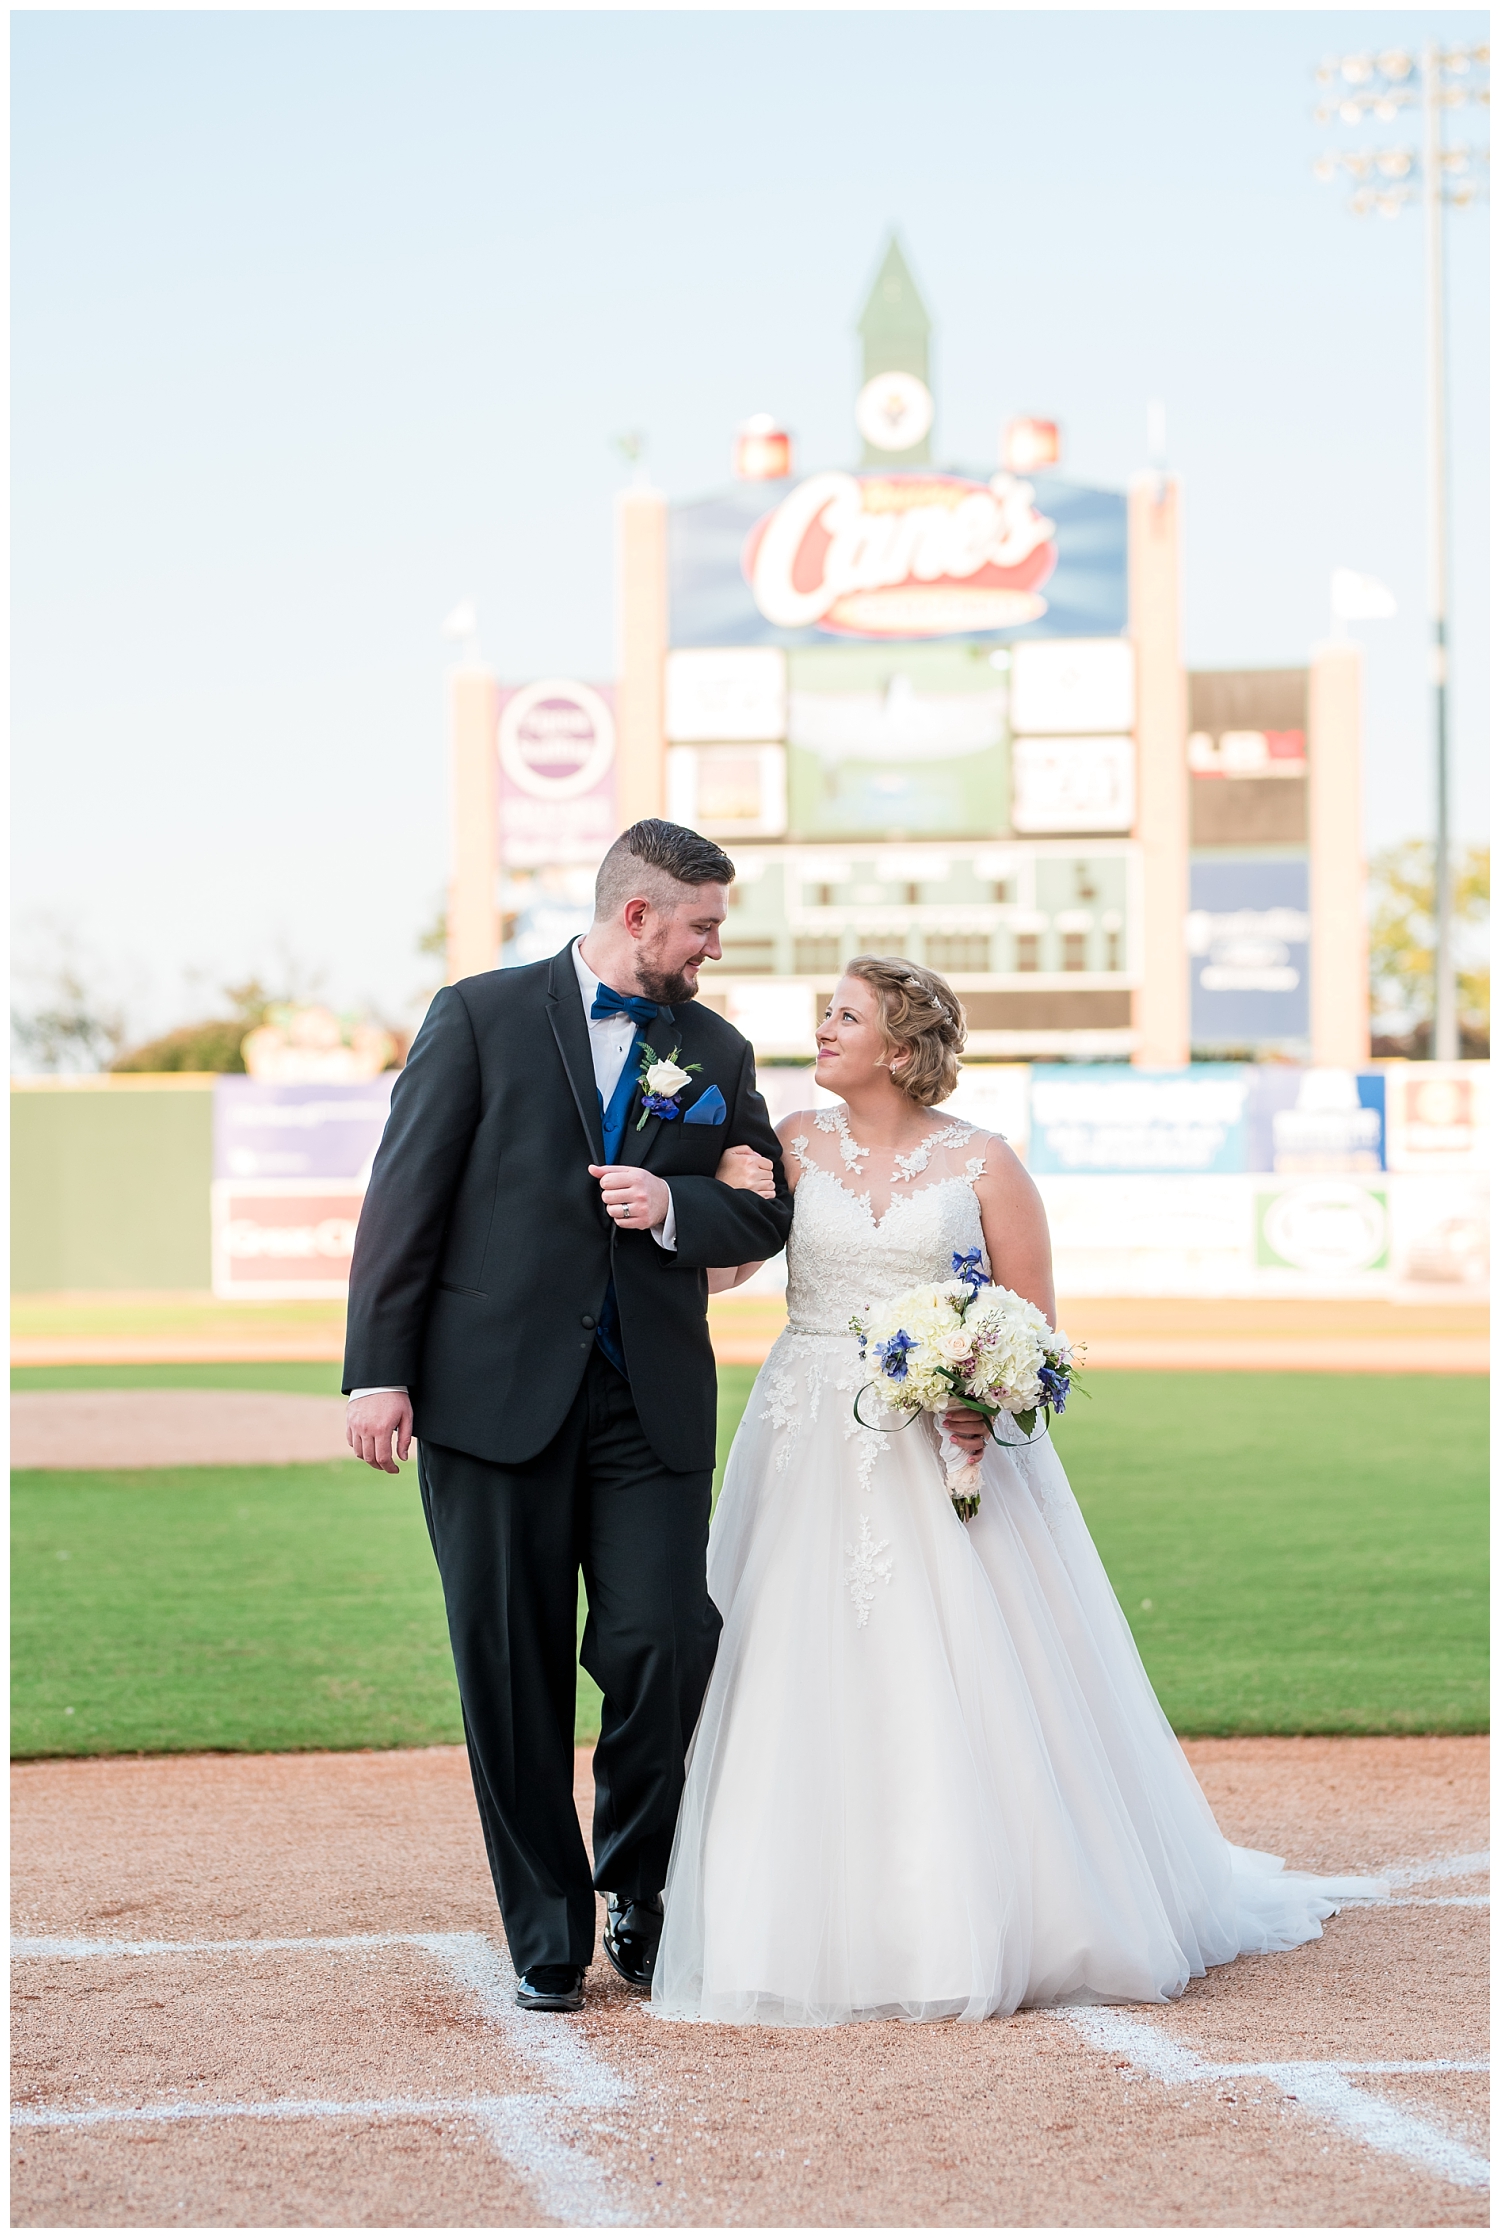 Sarah and David's Baseball Field Wedding in Lexington, Kentucky